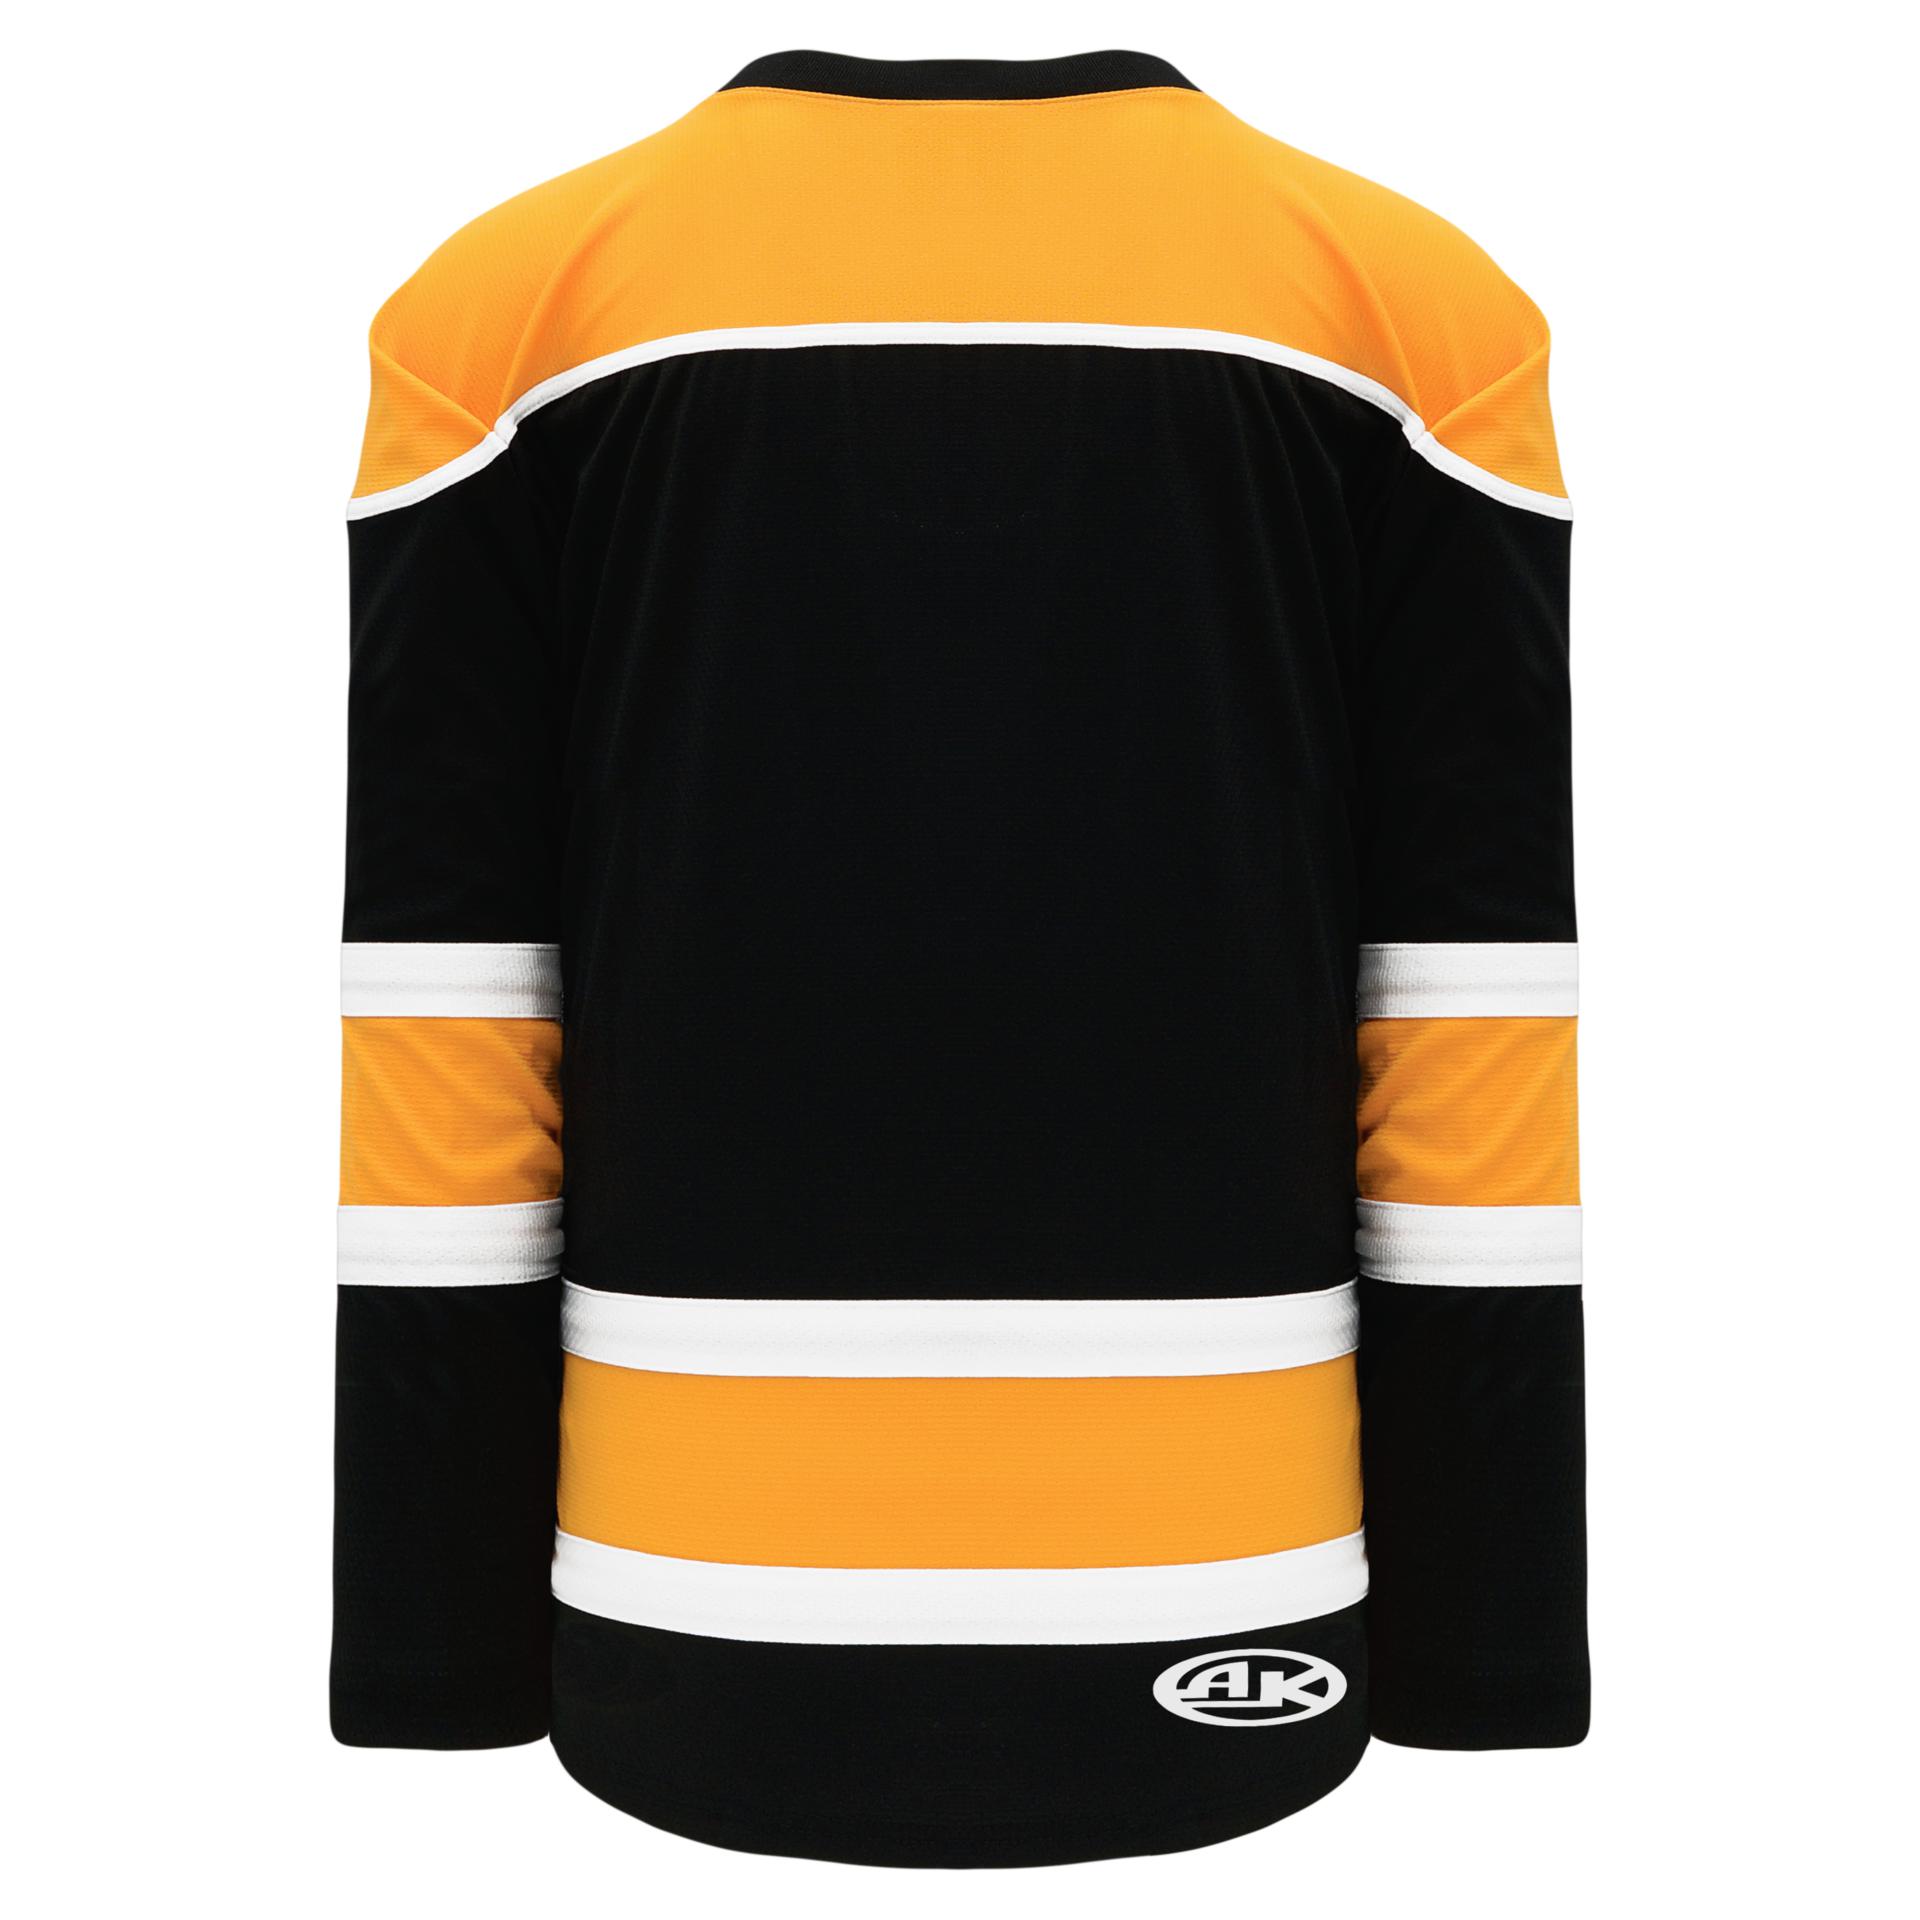 House League Hockey Jersey 2 (5200): White/Navy/Gold